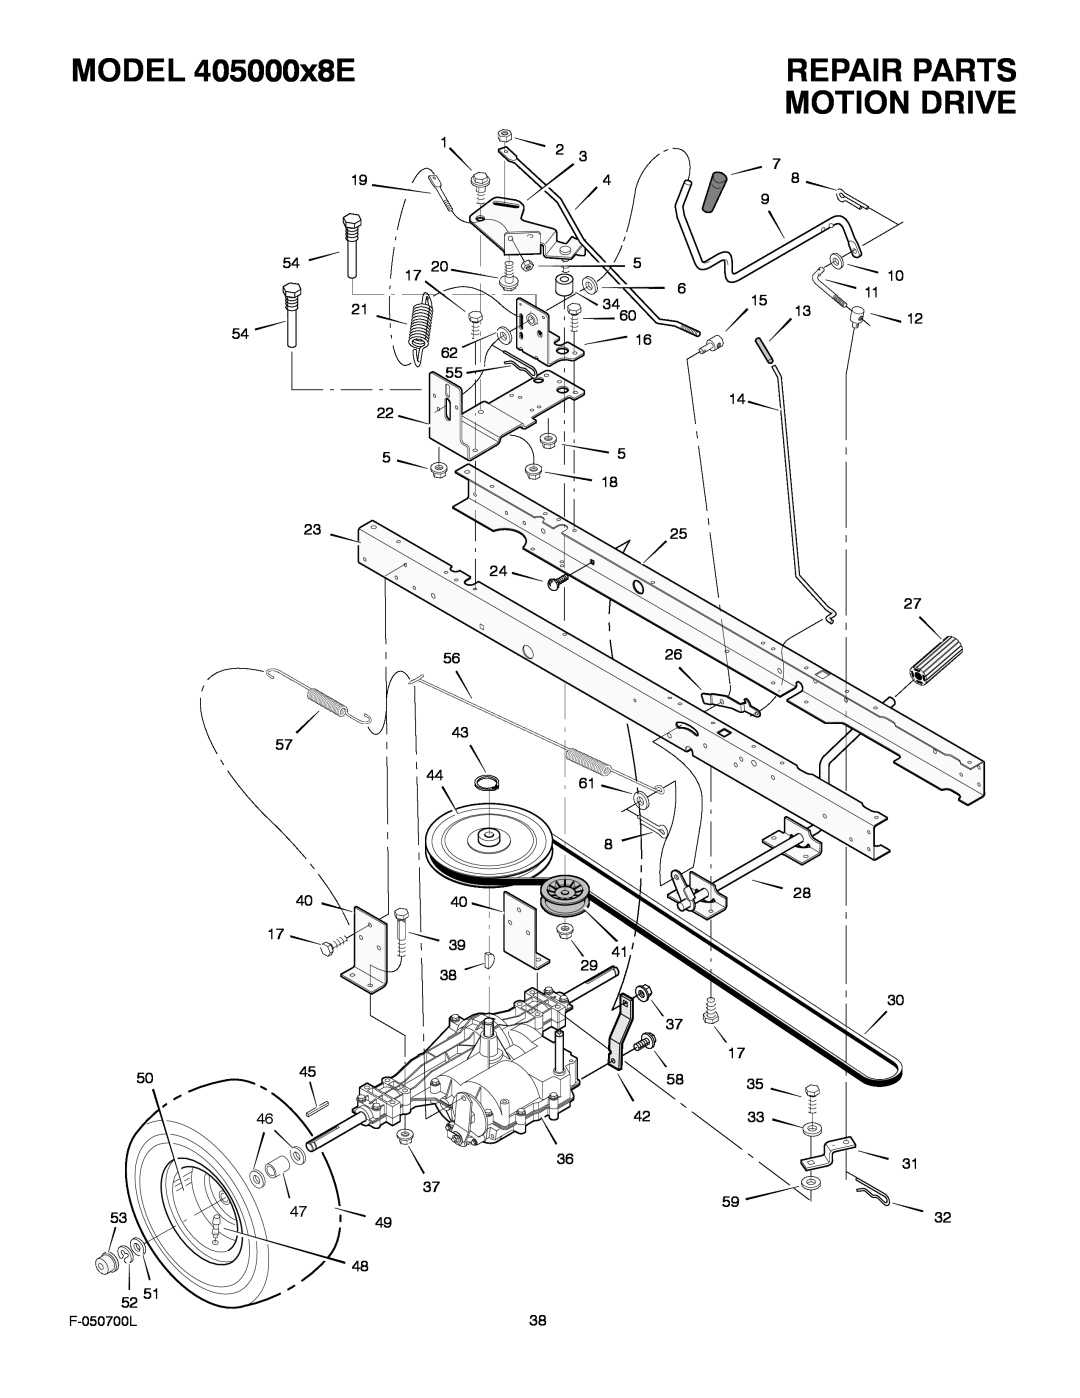 Murray manual Motion Drive, Repair Parts, MODEL 405000x8E, F-050700L 